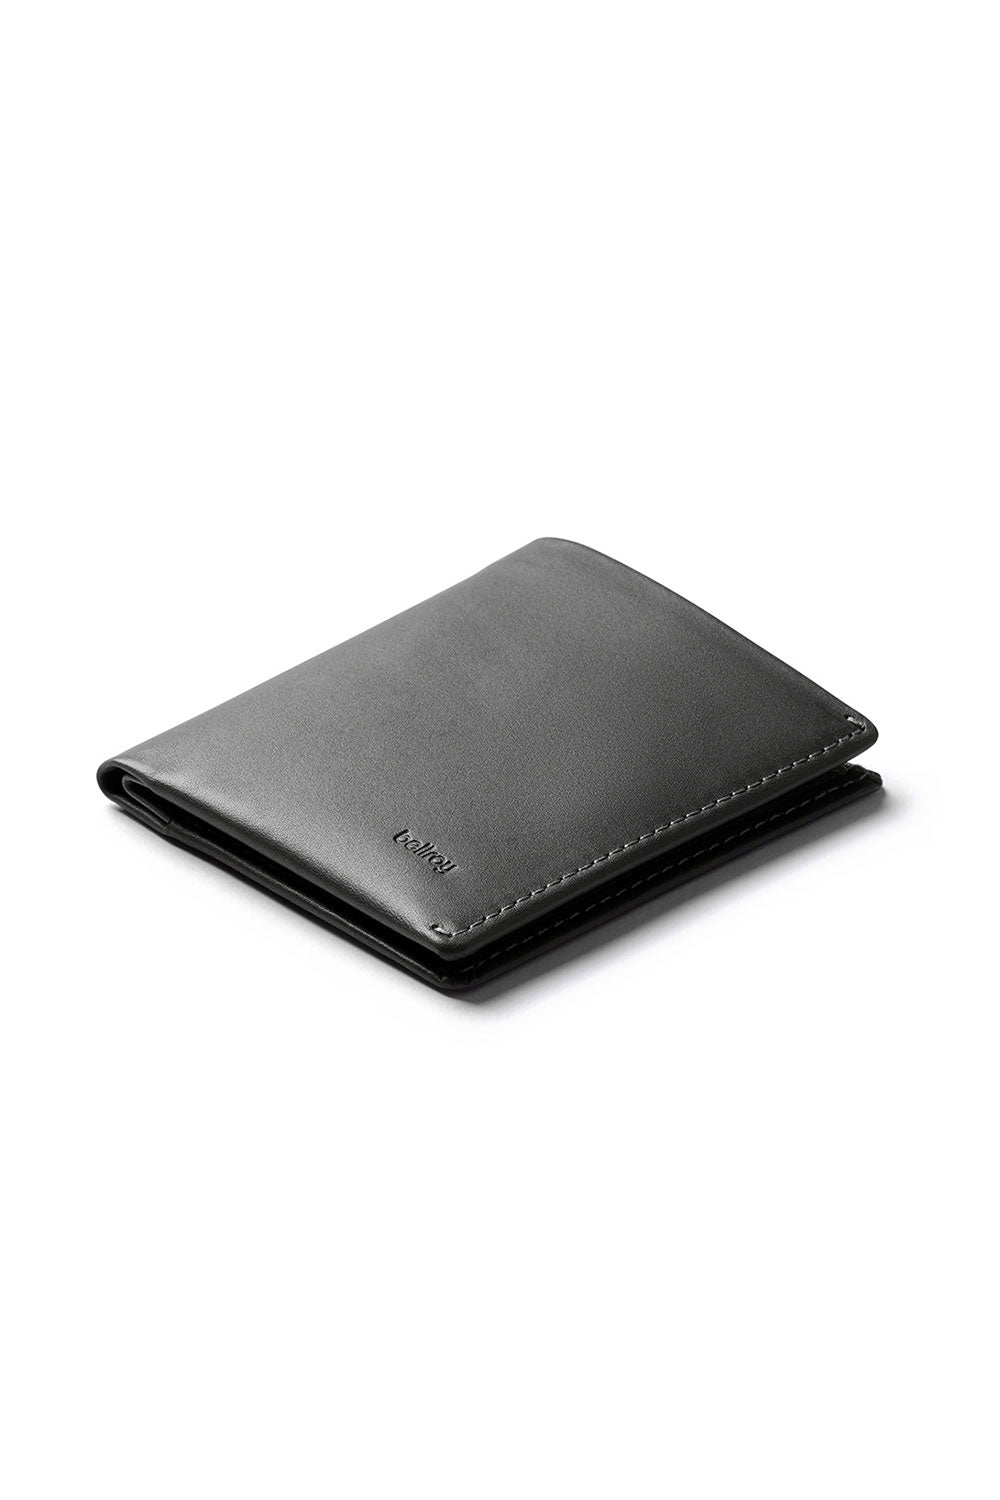 Bellroy - RFID Note Sleeve Wallet - Charcoal 